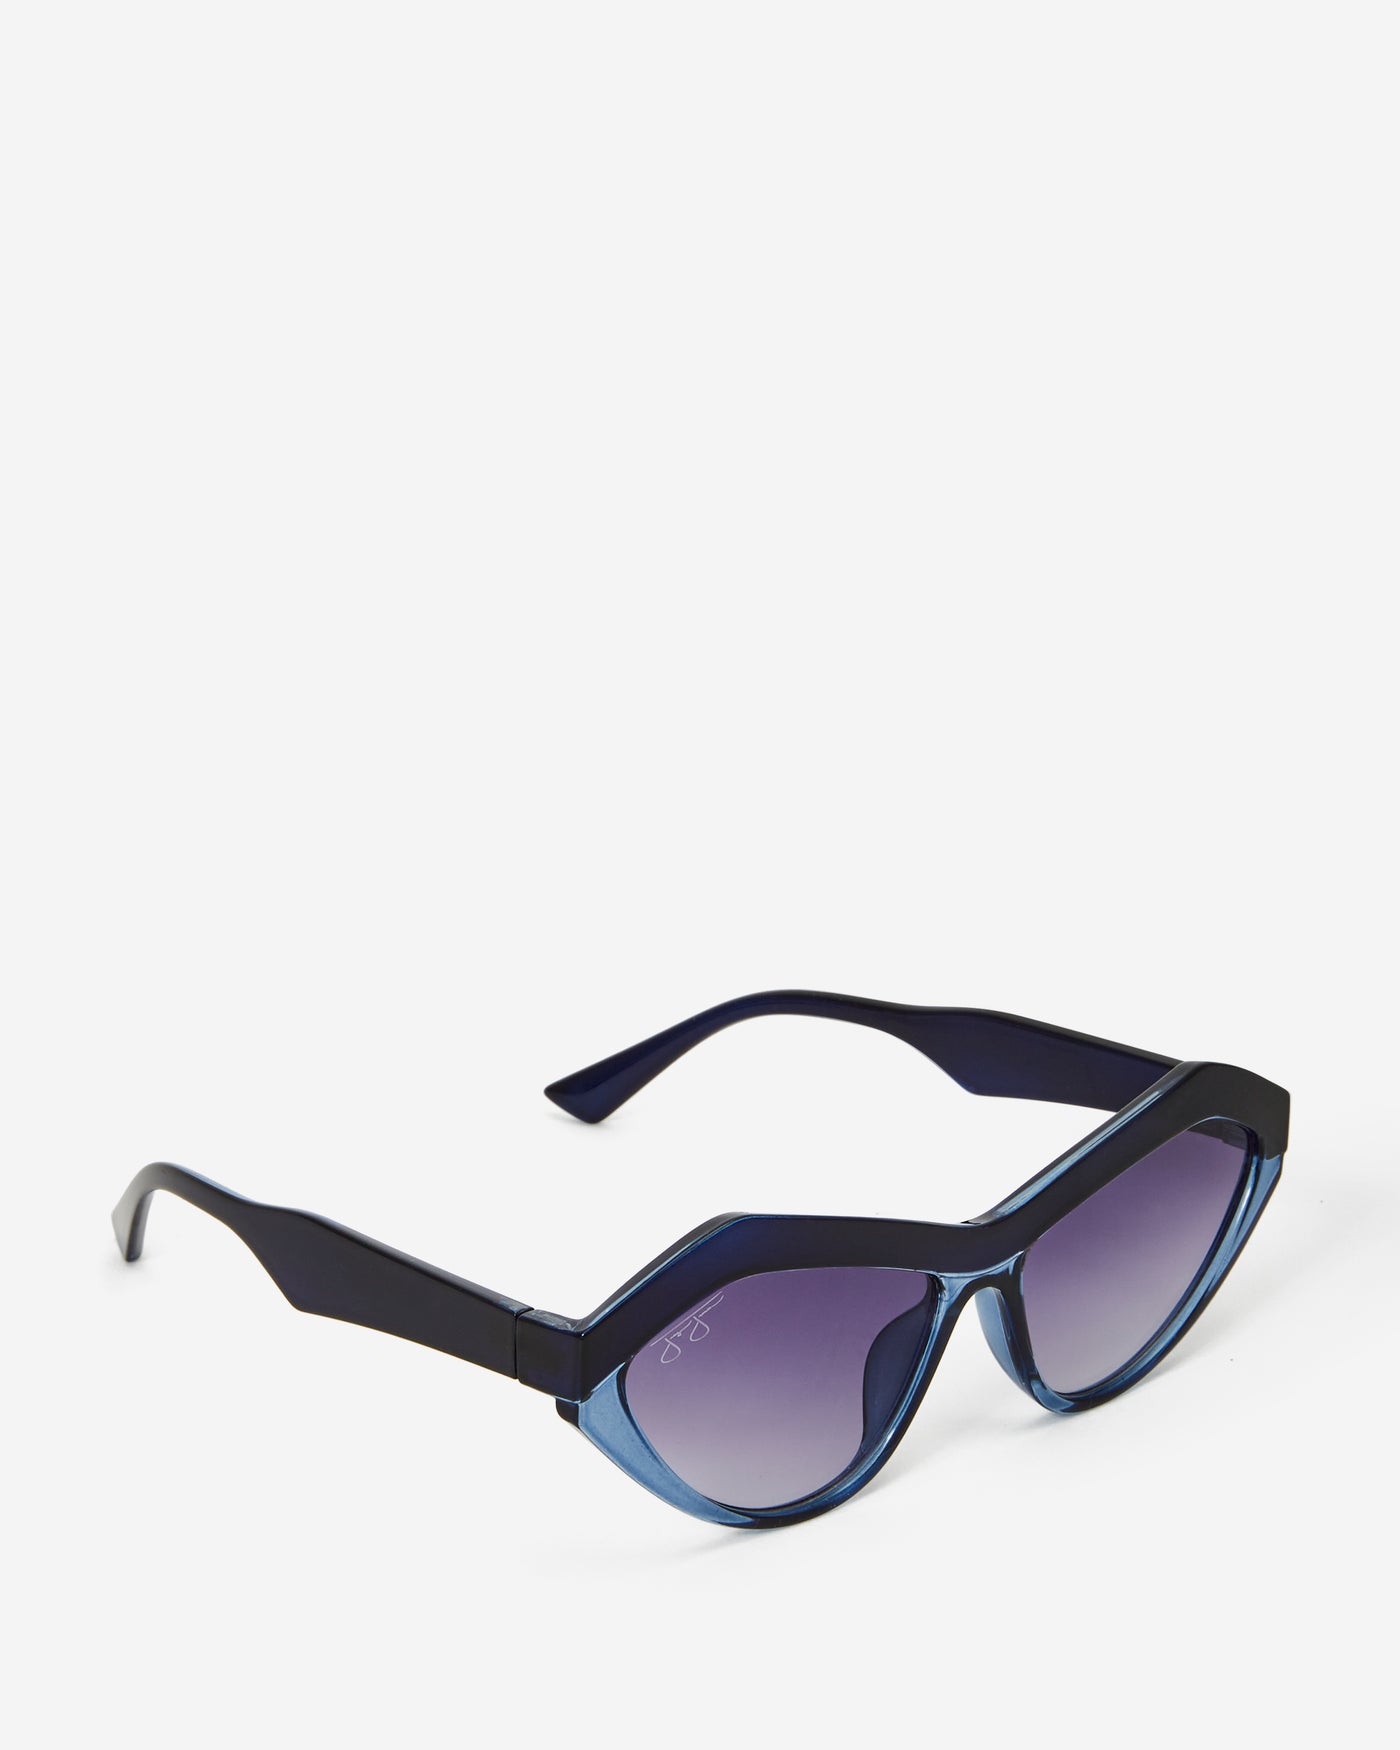 Geometric Frame Sunglasses - Blue Frame with Purple Smoke Lens Sunglasses Joey James, The Label   